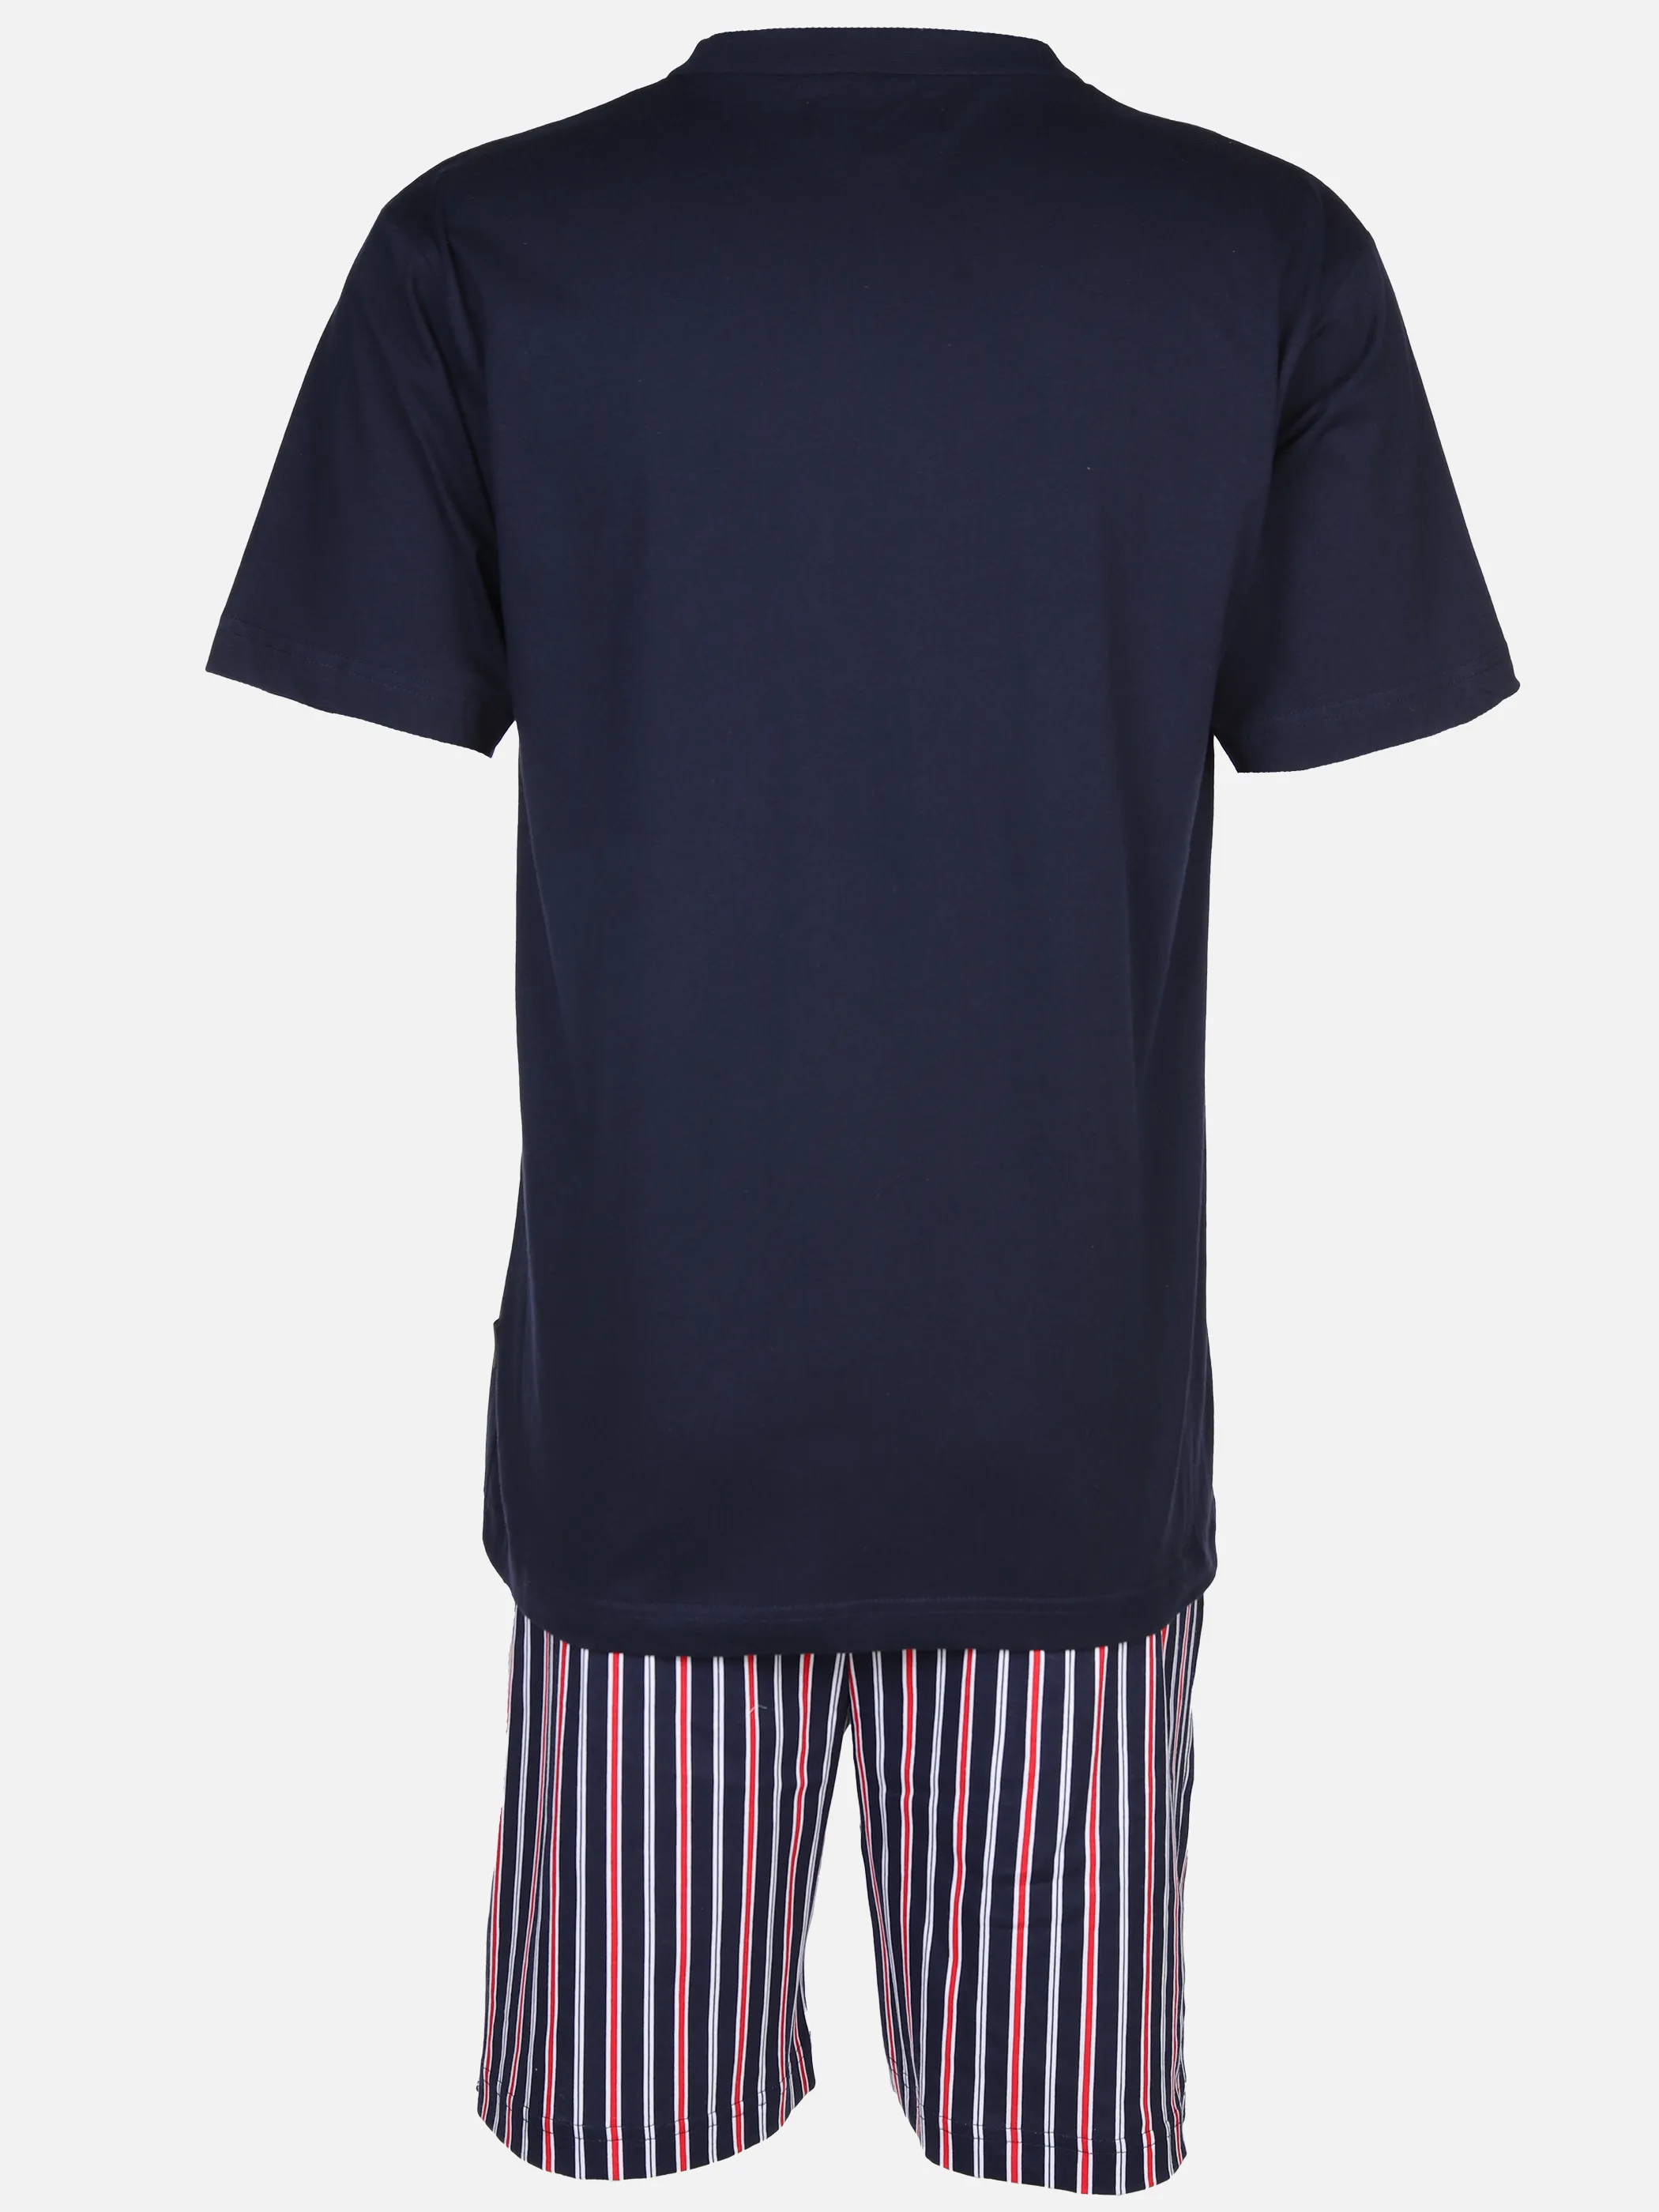 Jim Spencer He. Pyjama Shirt 1/2 Arm + Ber Blau 889139 NA/GR/RO 2